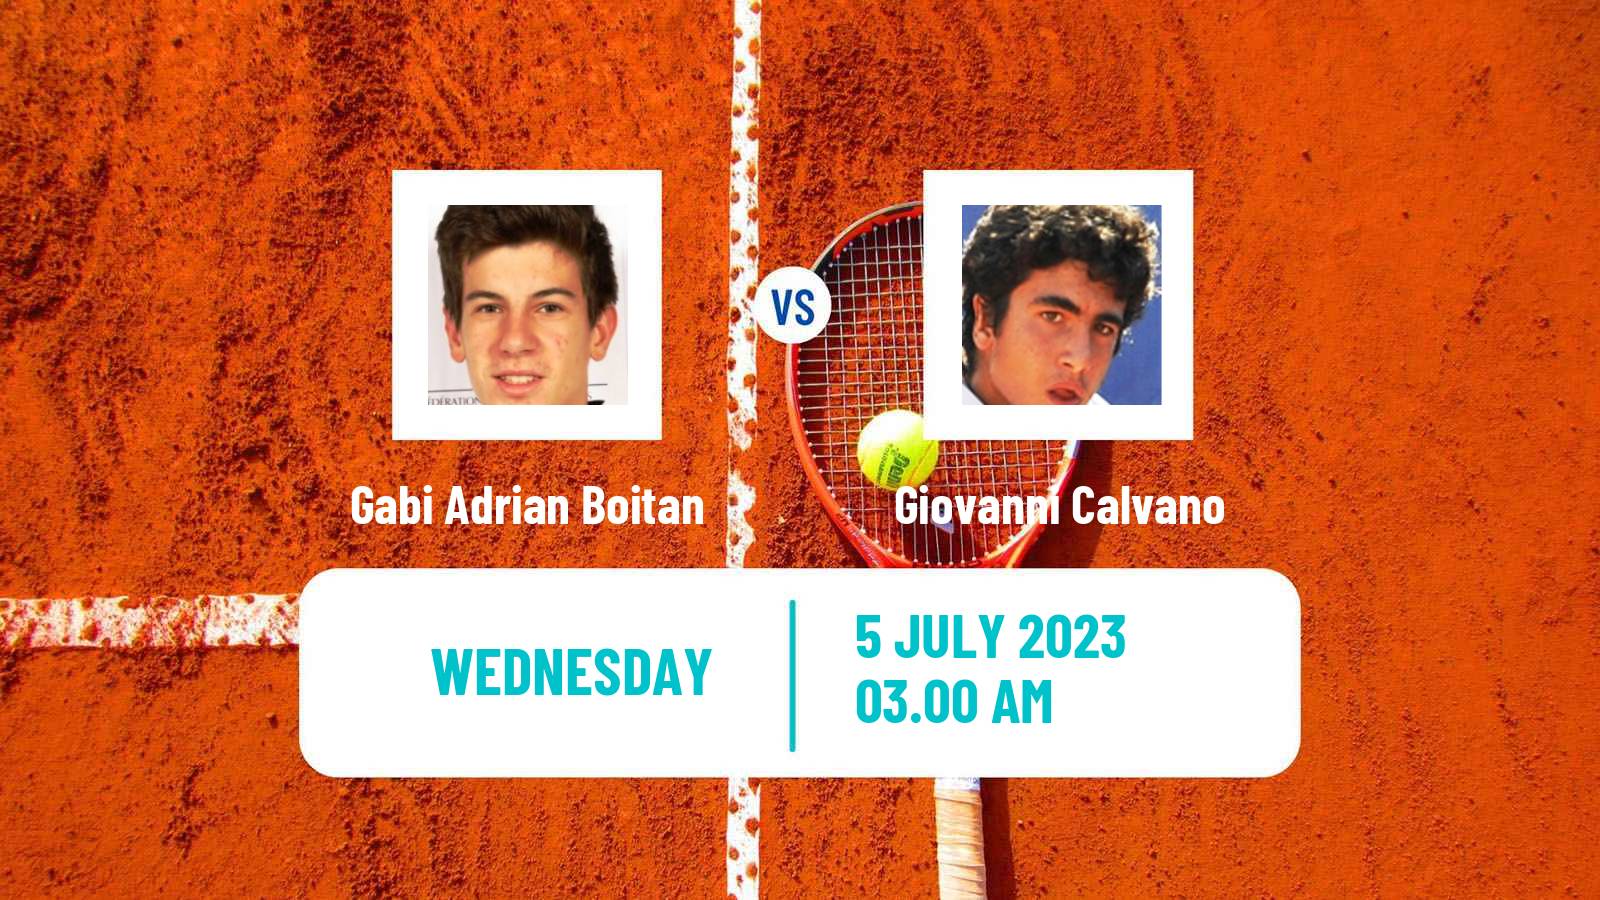 Tennis ITF M25 Brasov Men Gabi Adrian Boitan - Giovanni Calvano